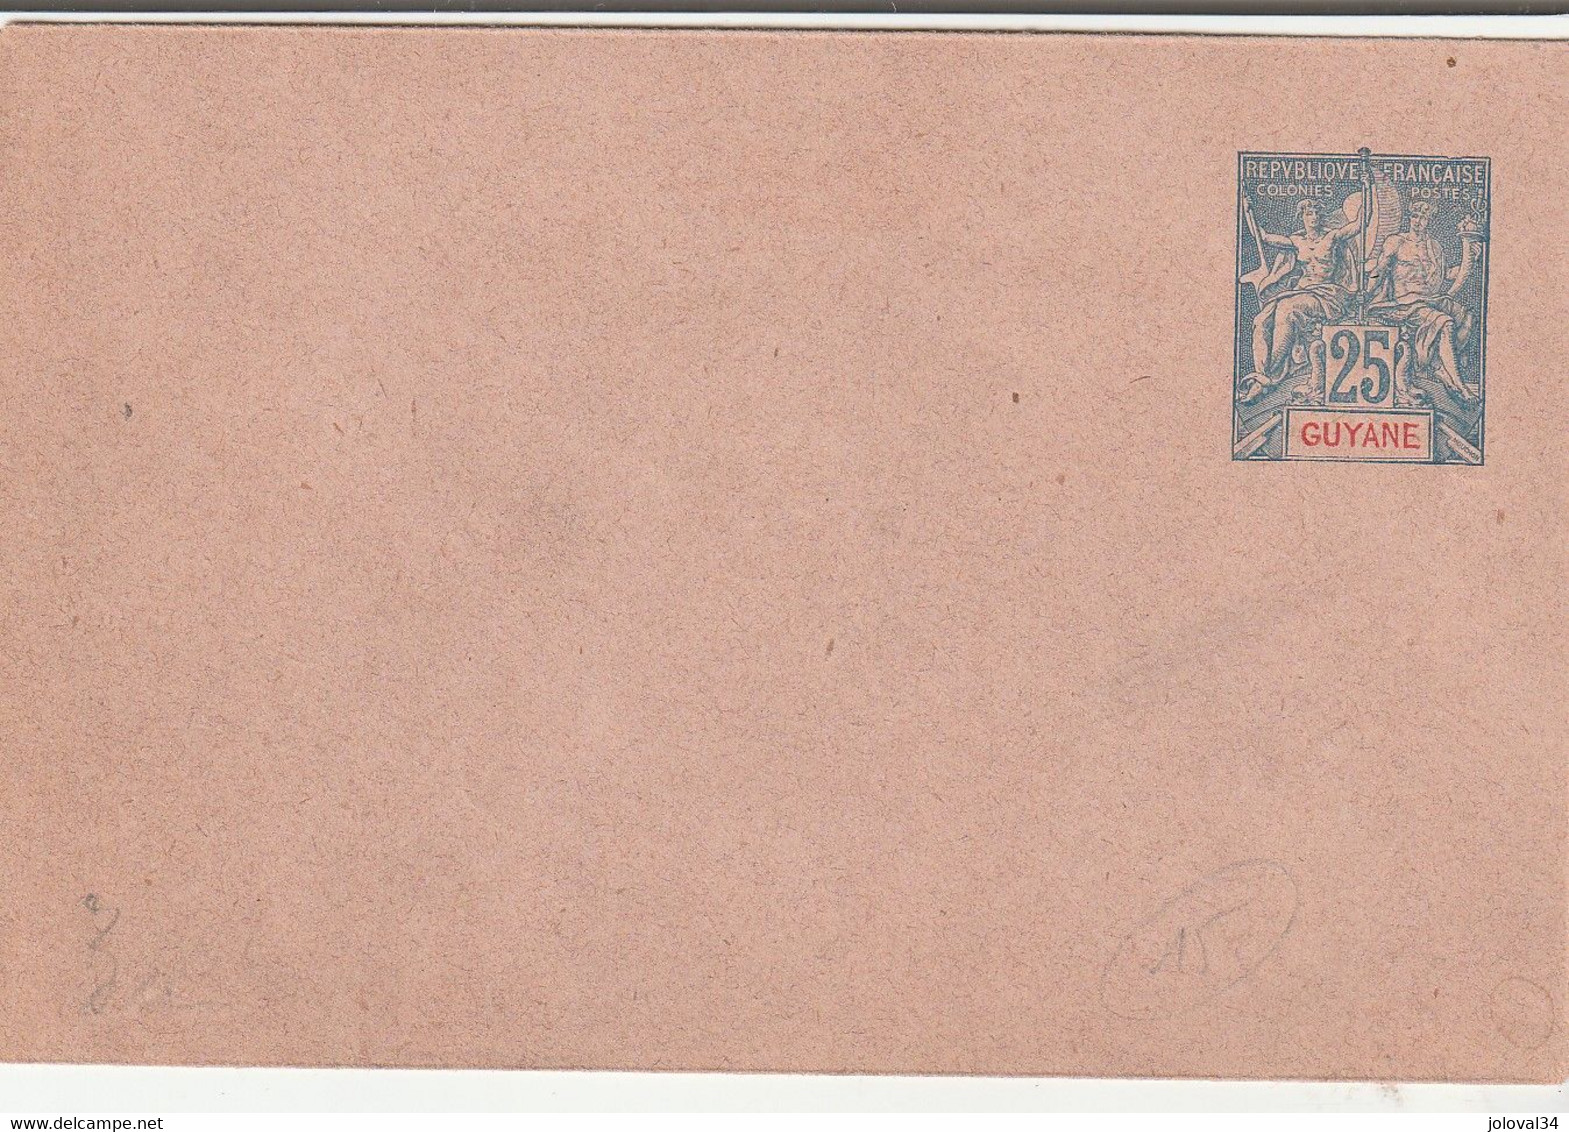 GUYANE - Entier Postal Type Sage 25 C Bleu -  Neuf - Enveloppe Format 11,5 X 7,5 Cm - Rabat Non Collé - Lettres & Documents